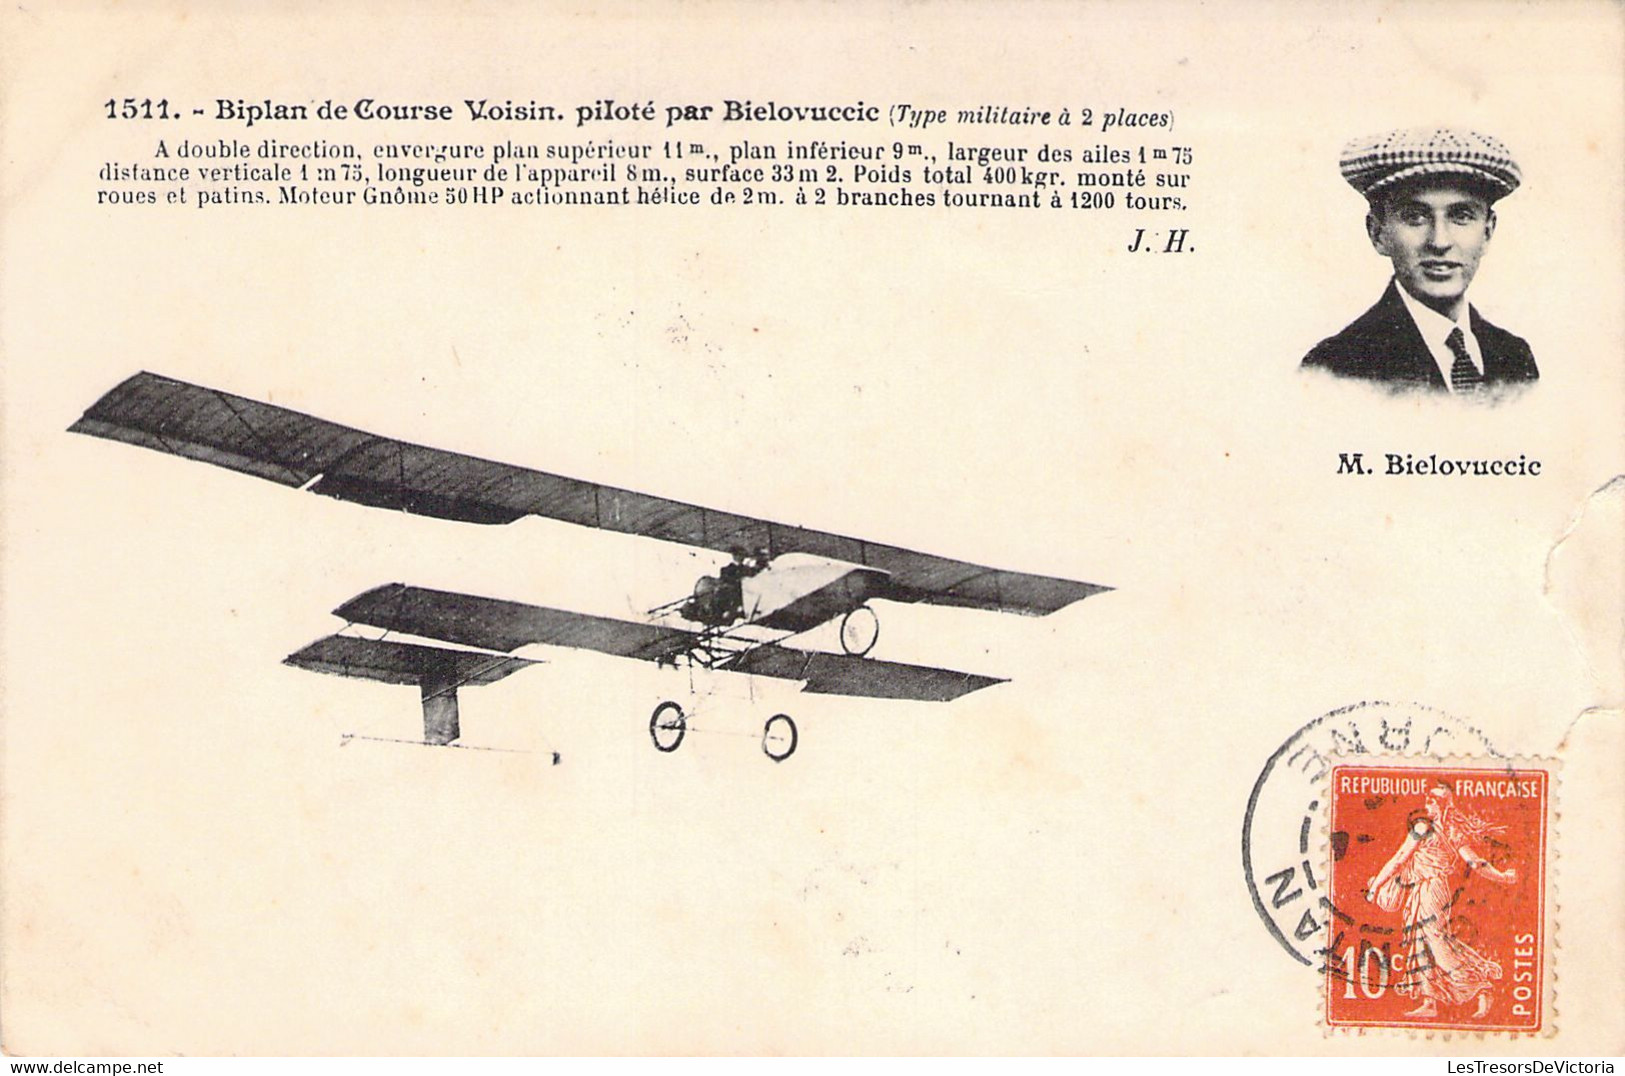 AVIATION - Aviateur - M BIELOVUCCIC - Biplan De Course Voisin - Carte Postale Ancienne - Airmen, Fliers